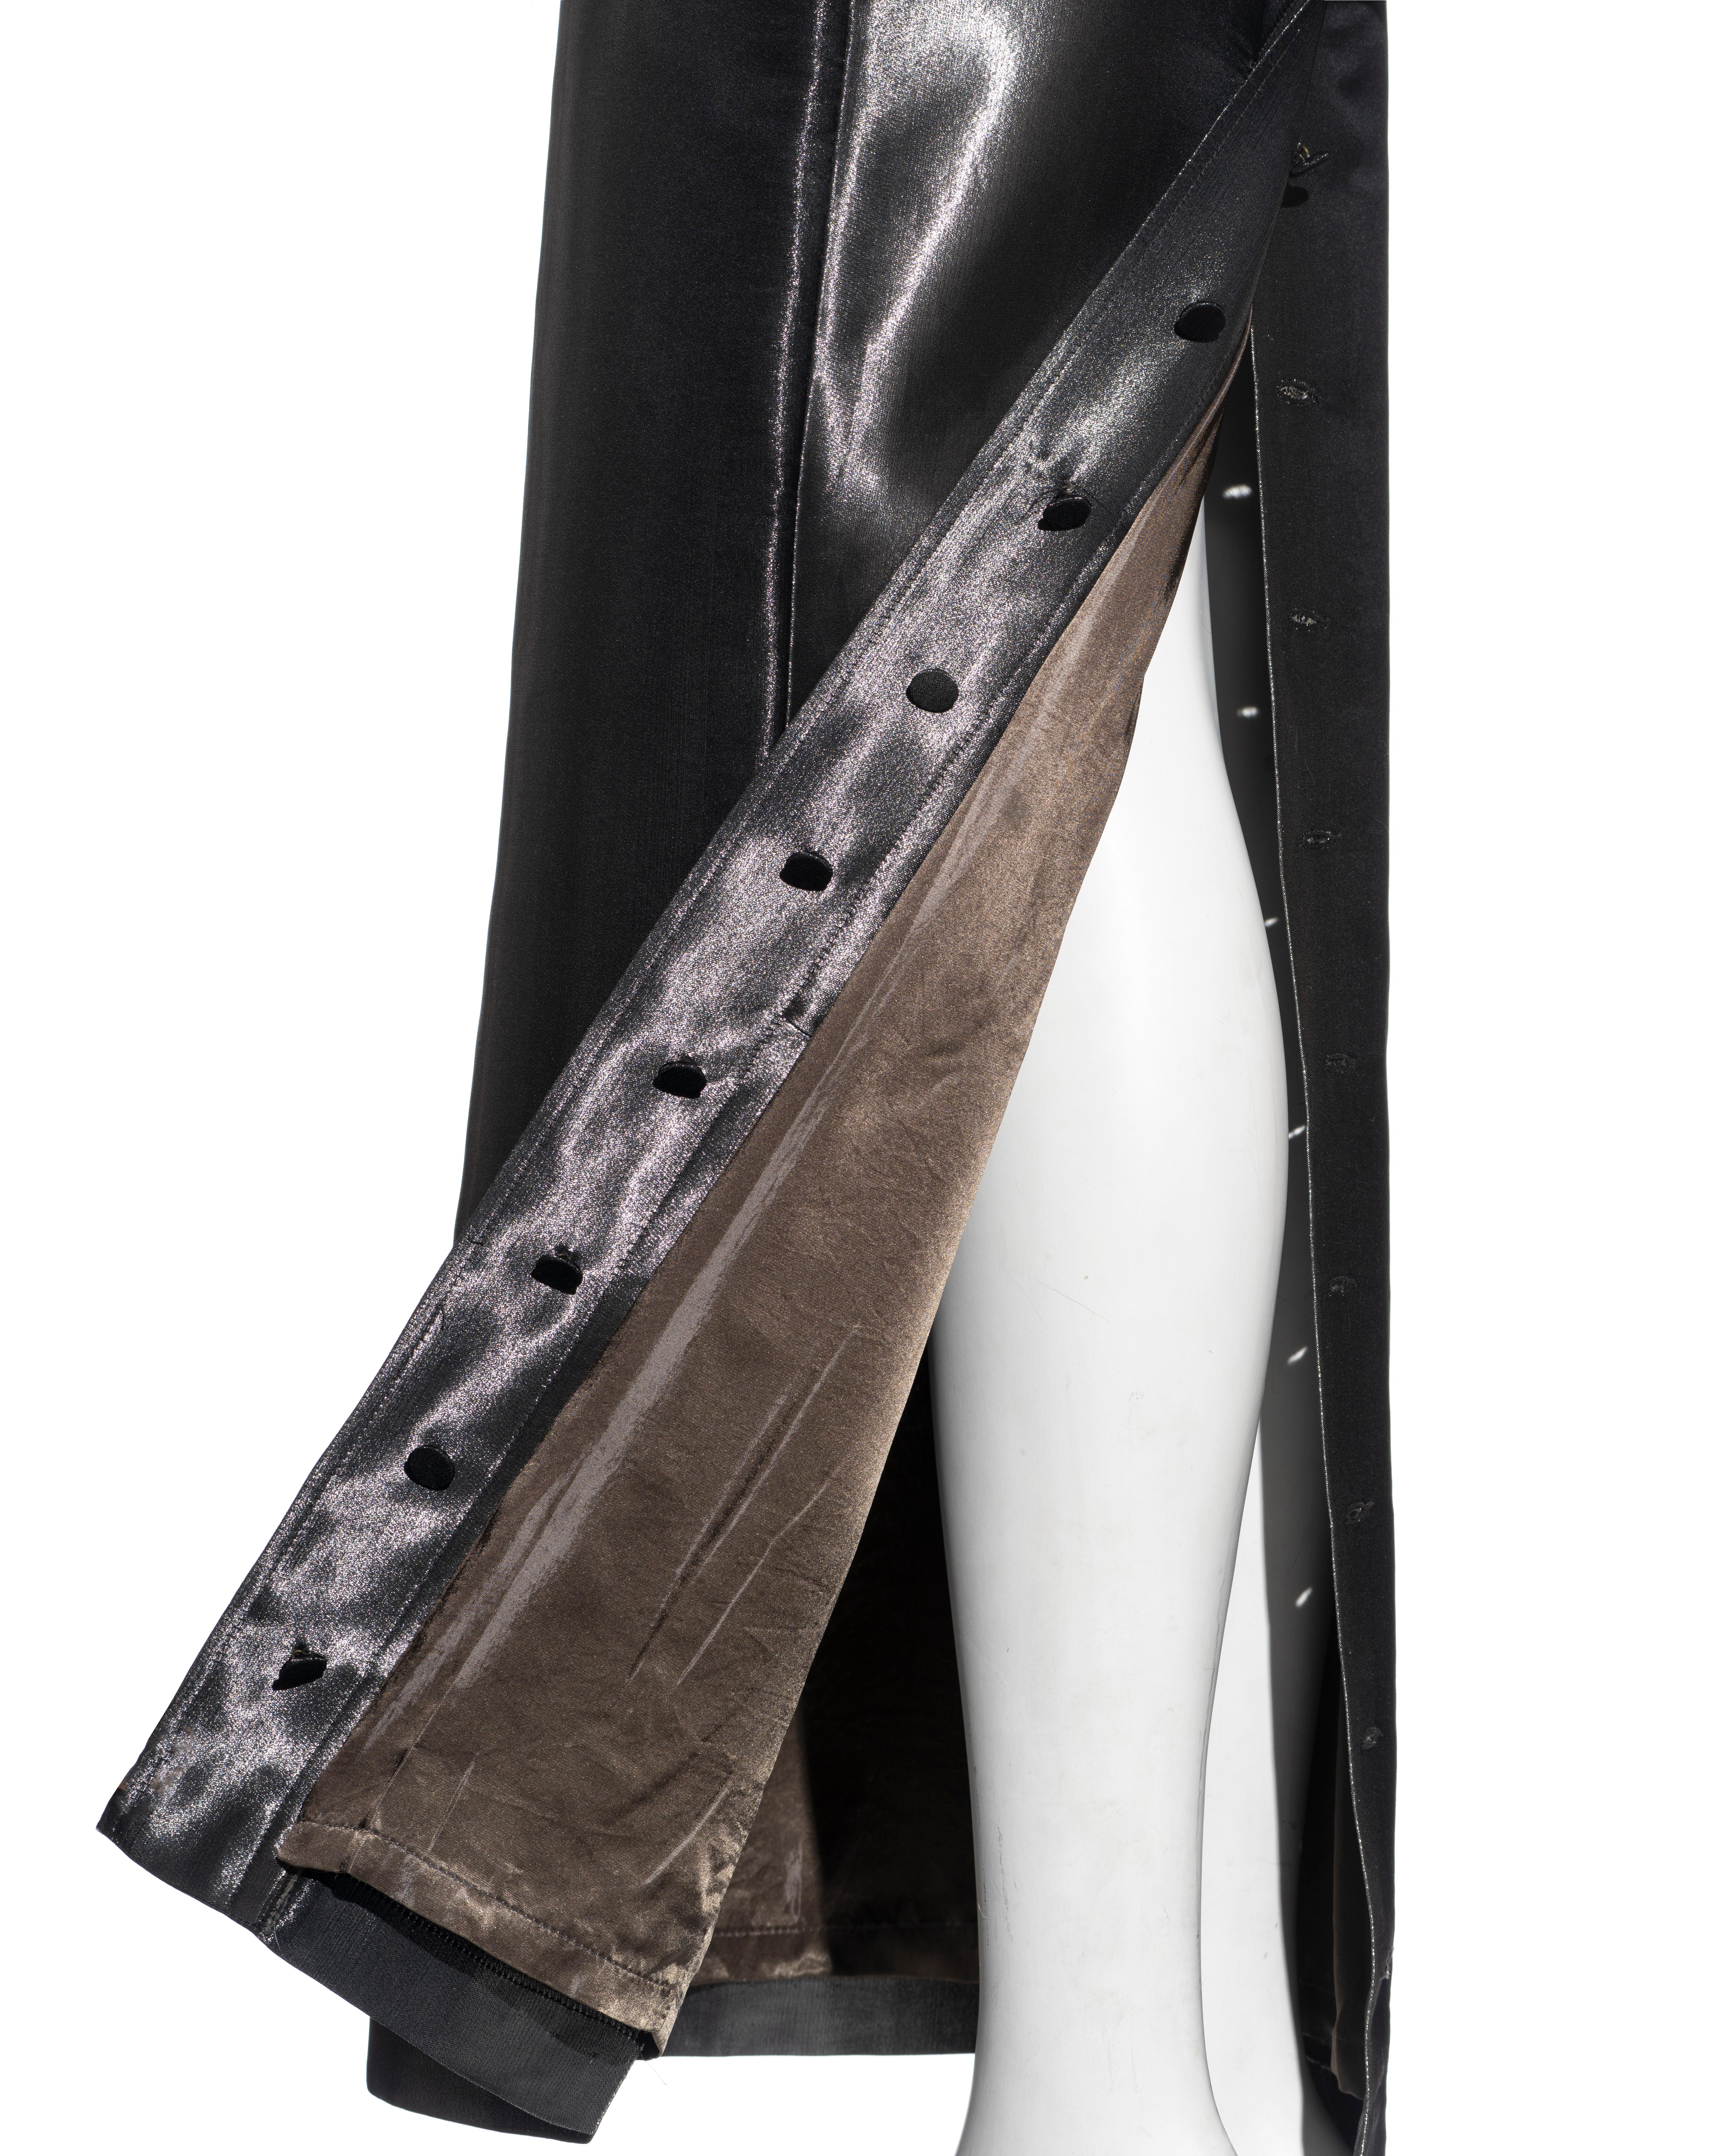 Jean Paul Gaultier metallic gunmetal silk skirt suit, fw 1997 1